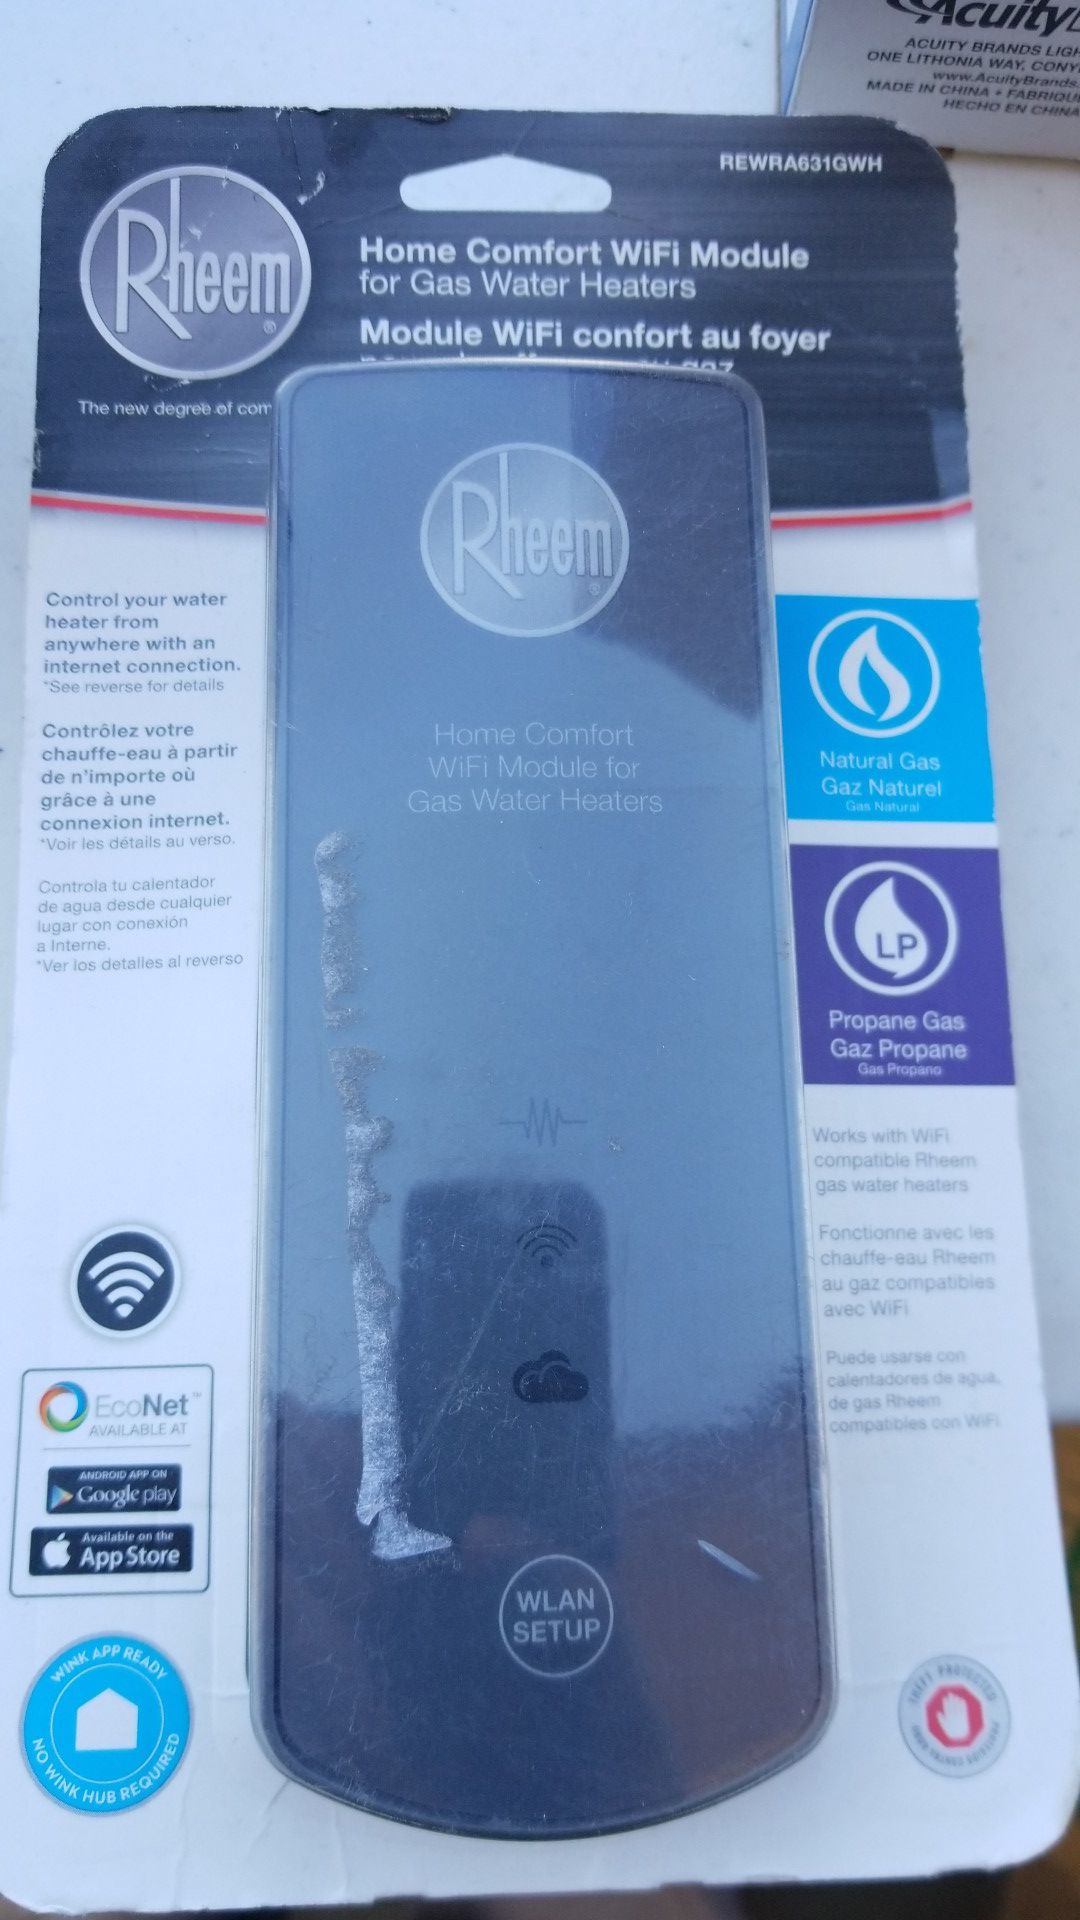 Rheem home comfort WiFi module for gas water heaters